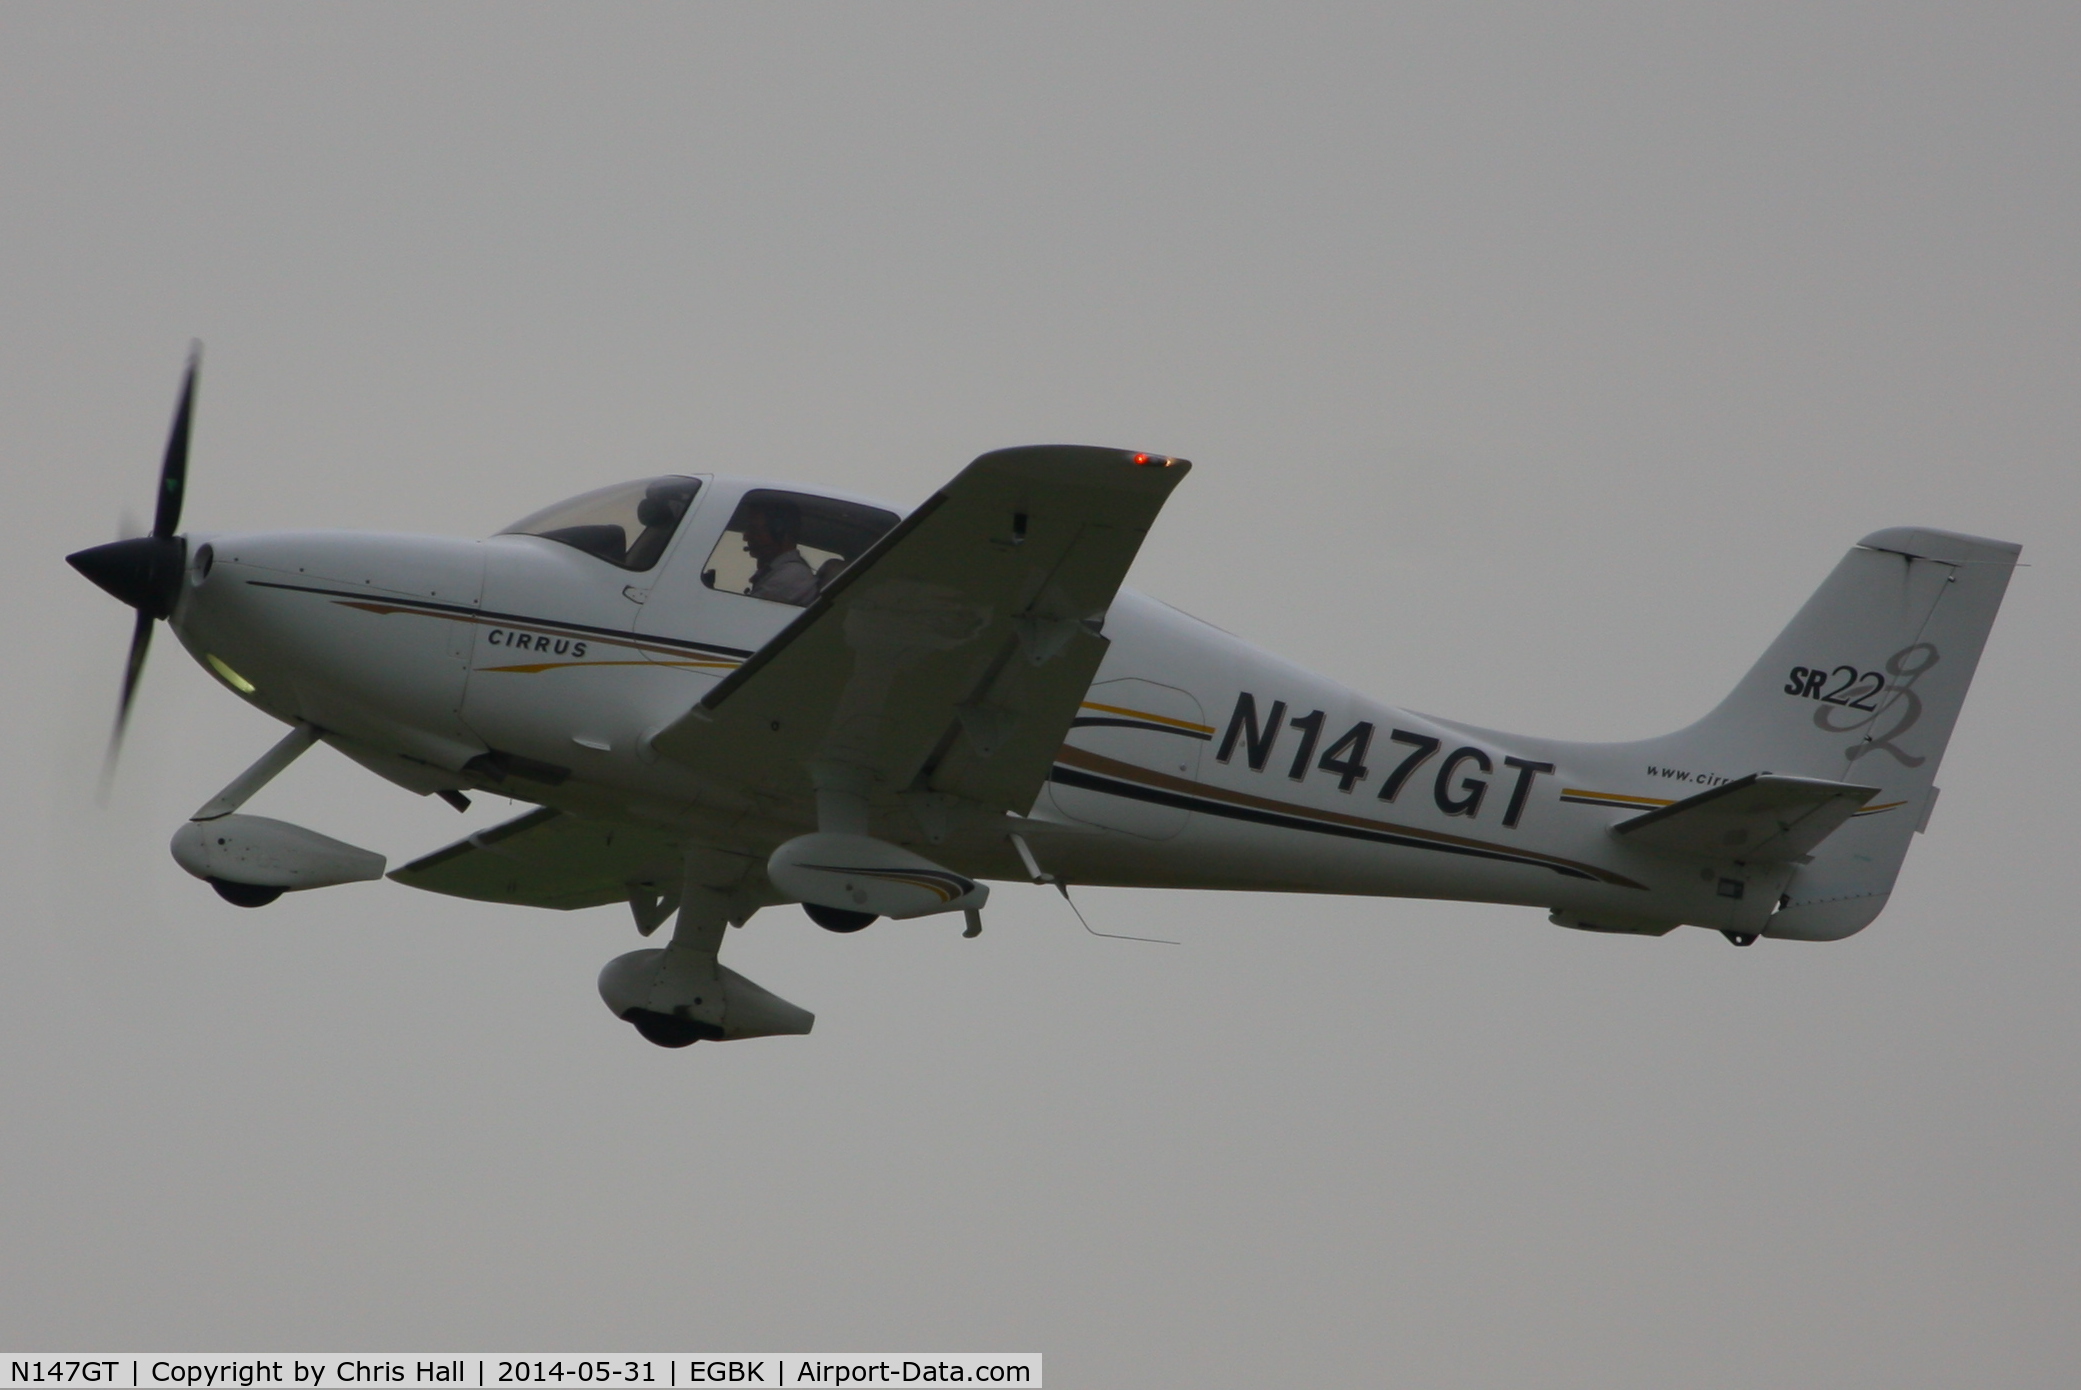 N147GT, 2004 Cirrus SR22 G2 C/N 1069, at AeroExpo 2014